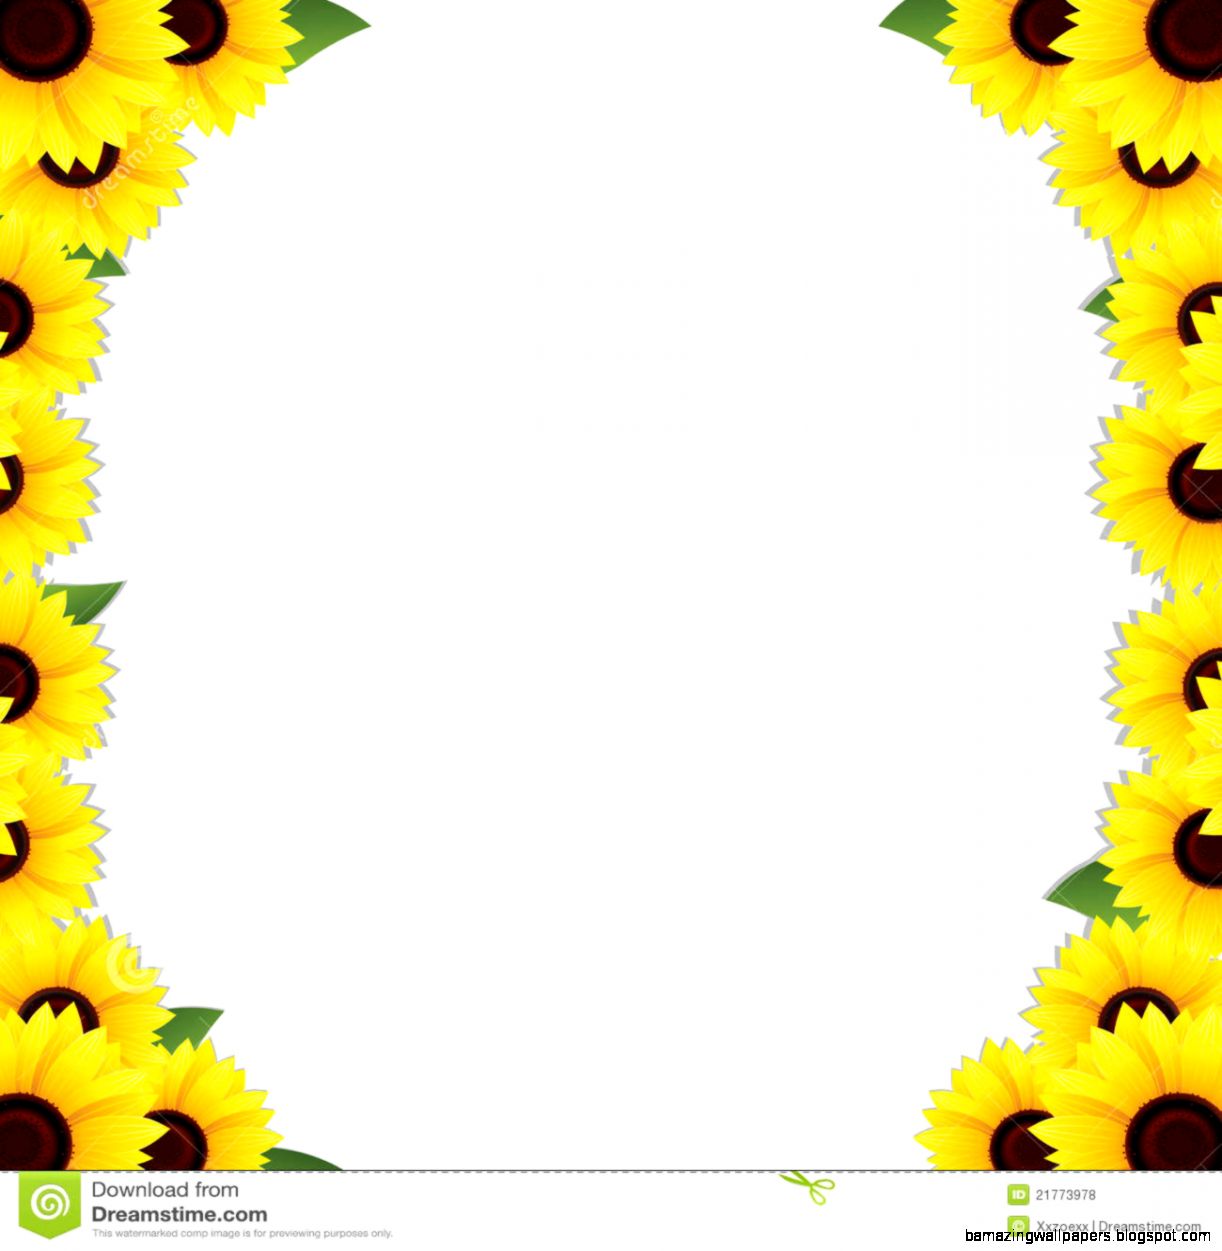 Pin By Pean Yosores On Sunflower Sunflower Iphone Wallpaper